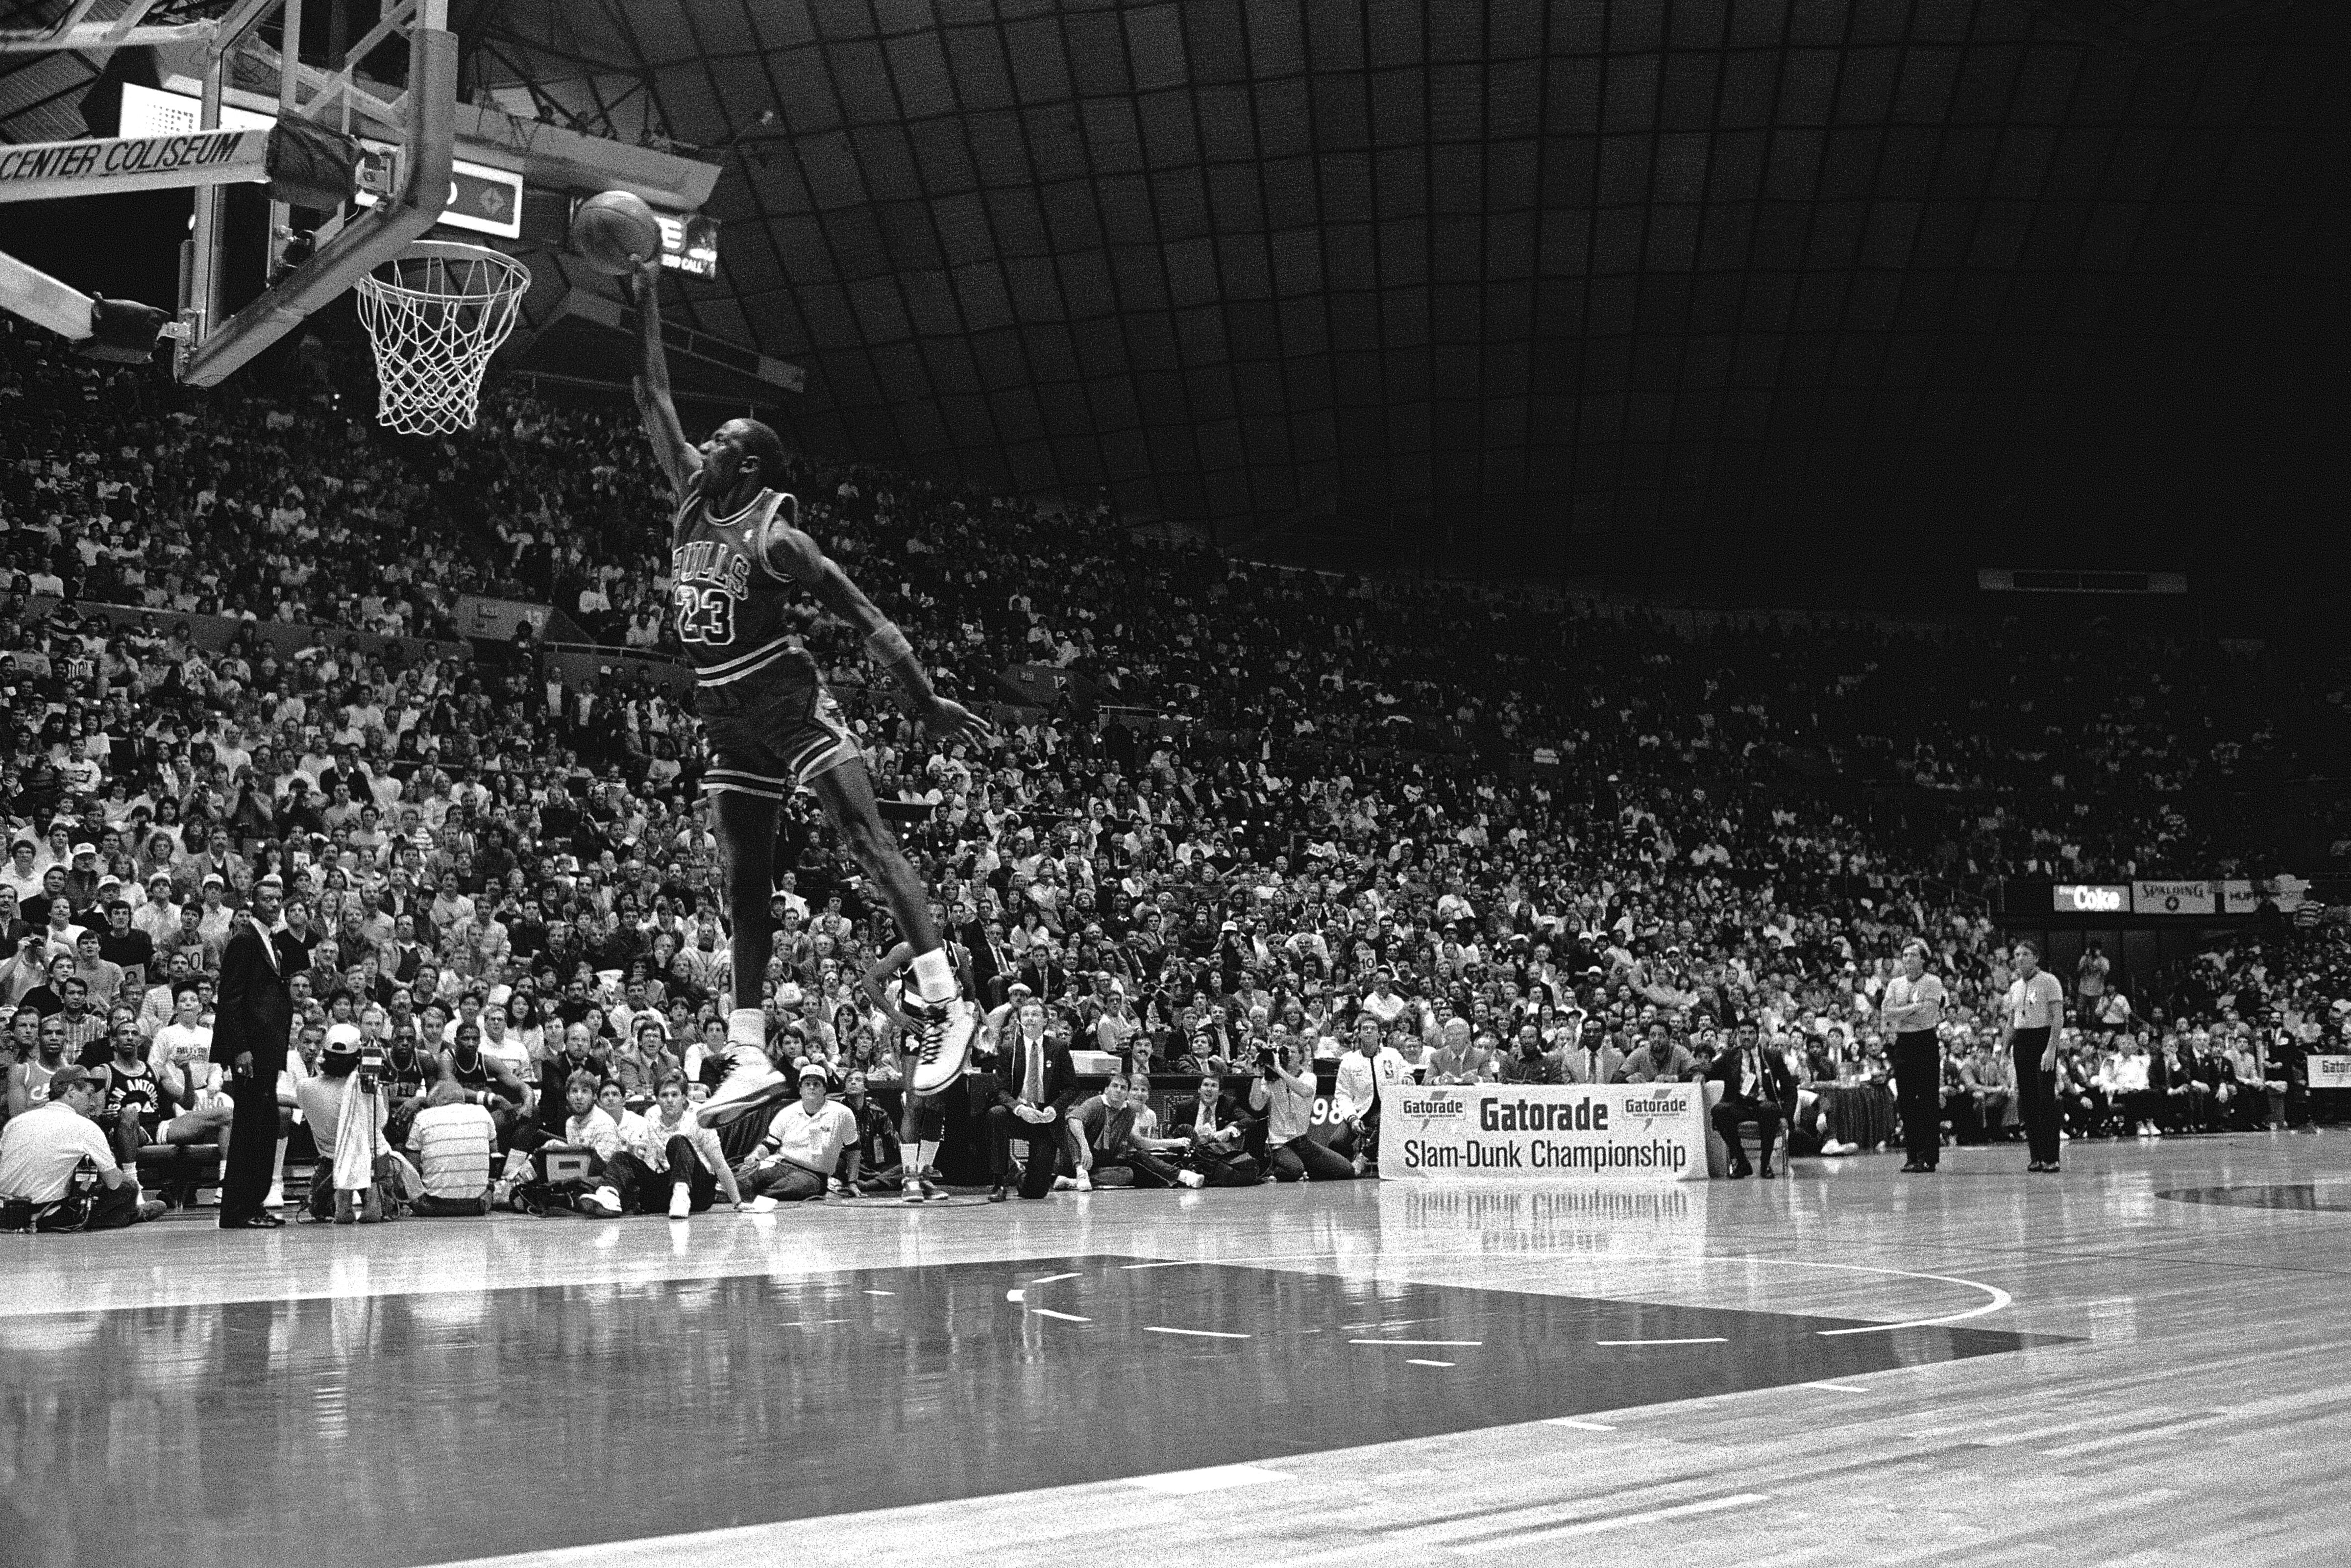 Photo of a man jumping towards a basketball hoop